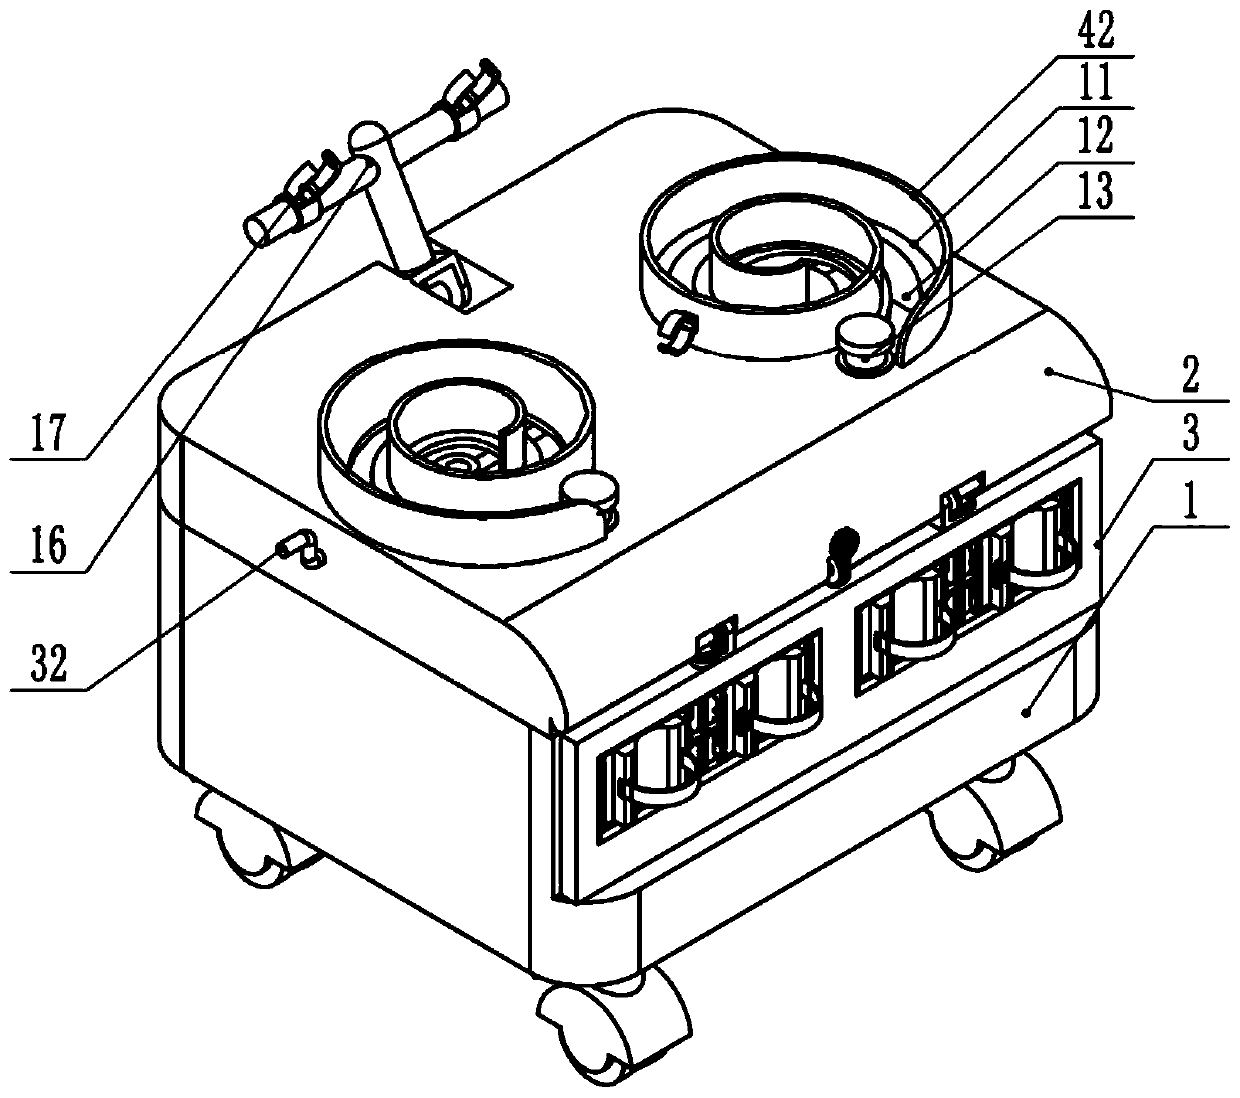 In-vitro fixing device for nephrosis dialysis tube